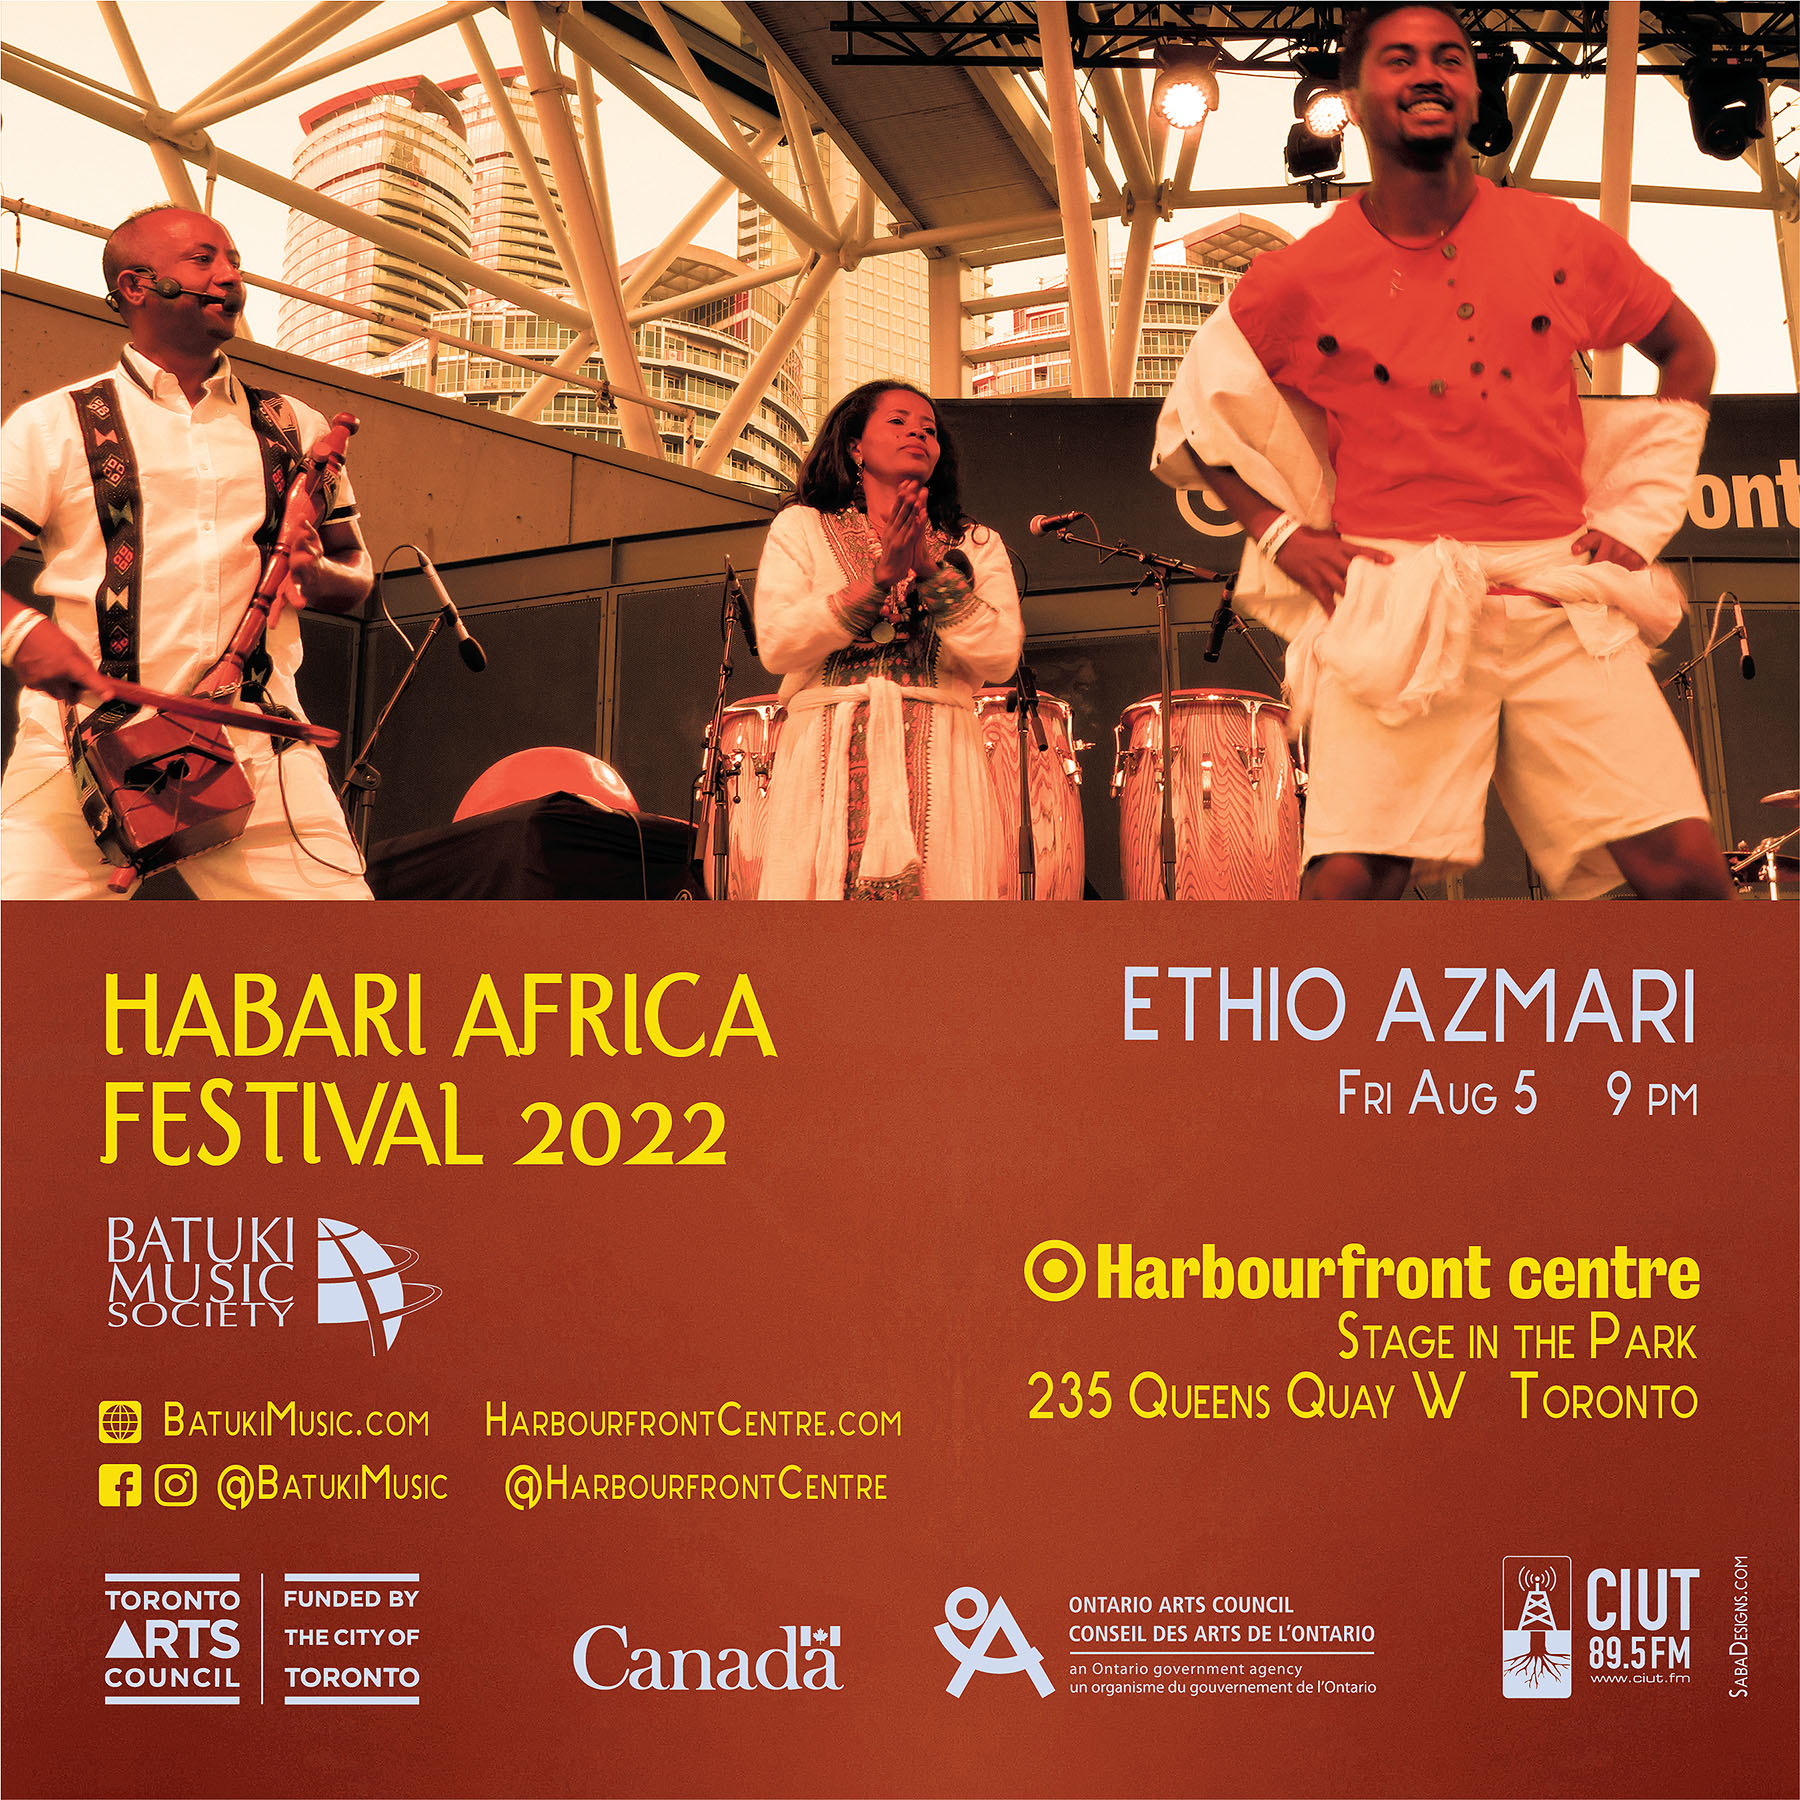 Habari Africa Live Festival 2022 by Batuki Music Society Ethio Azmari